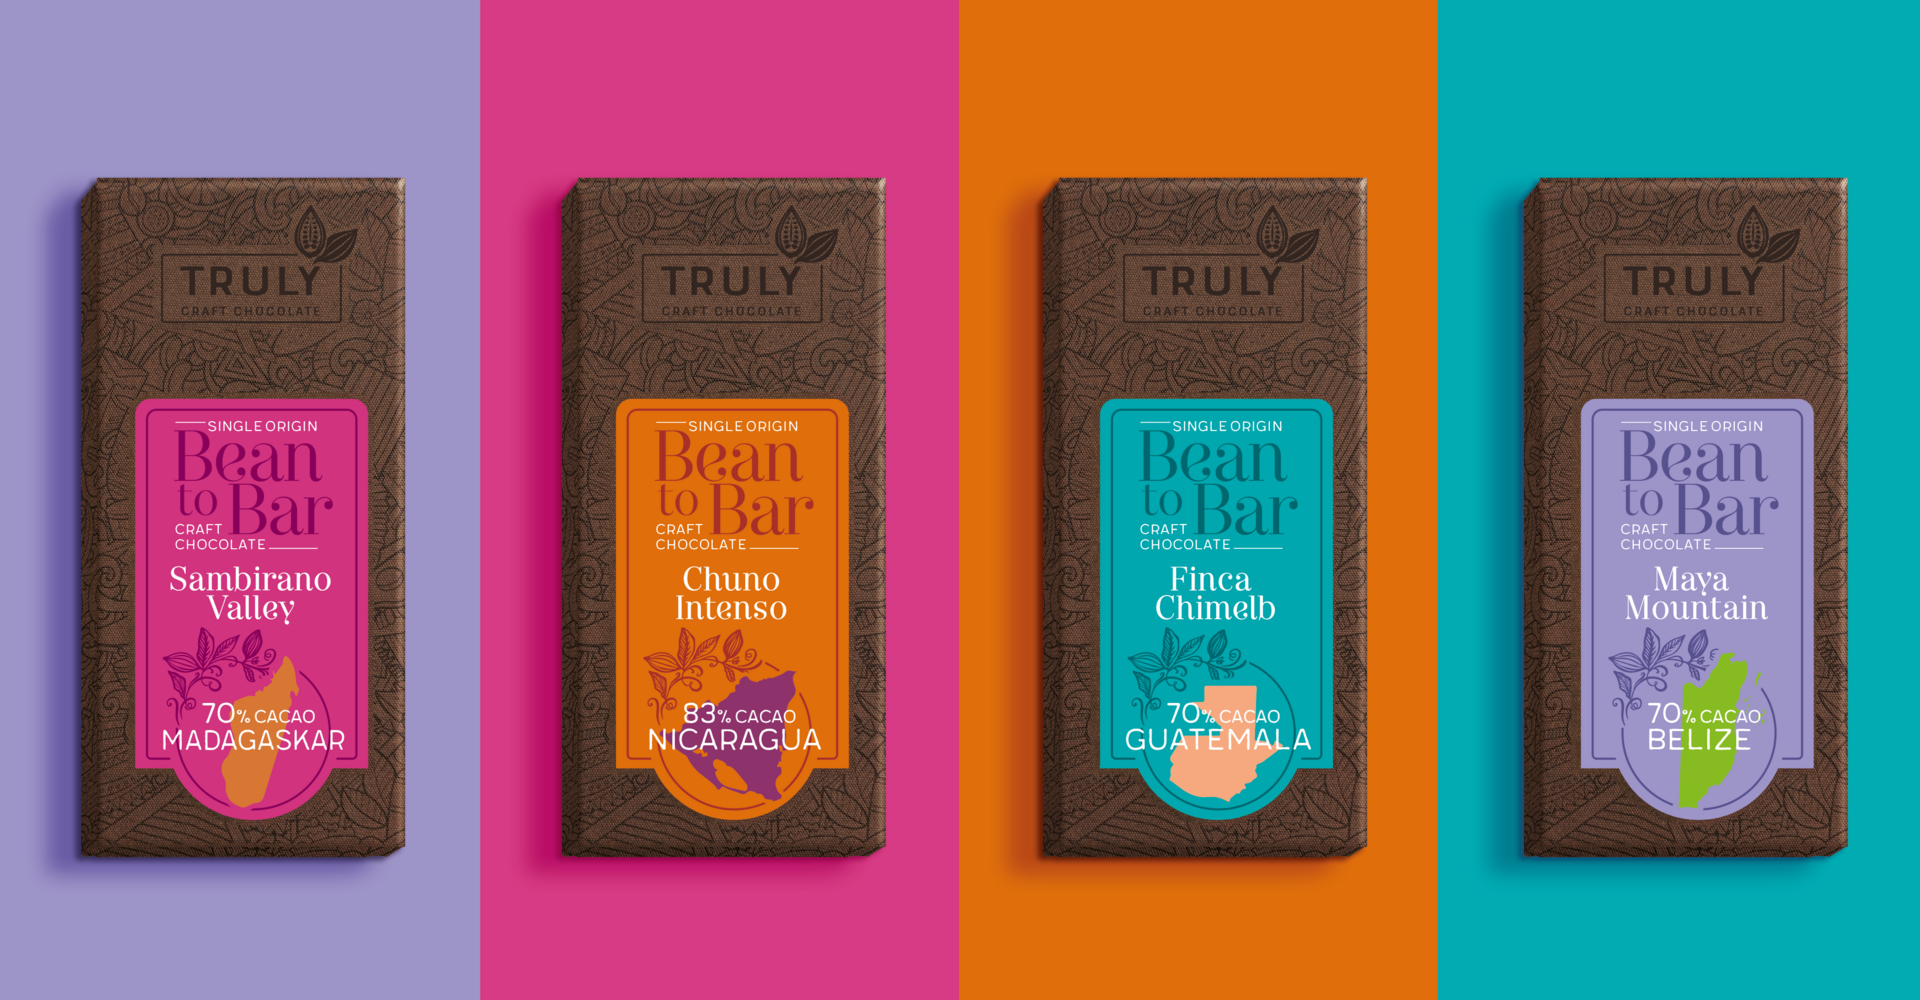 Bean to Bar Truly Craft Chocolate Relaunch Grafikdesign Branding-Strategie Logodesign Verpackungsdesign POS Material